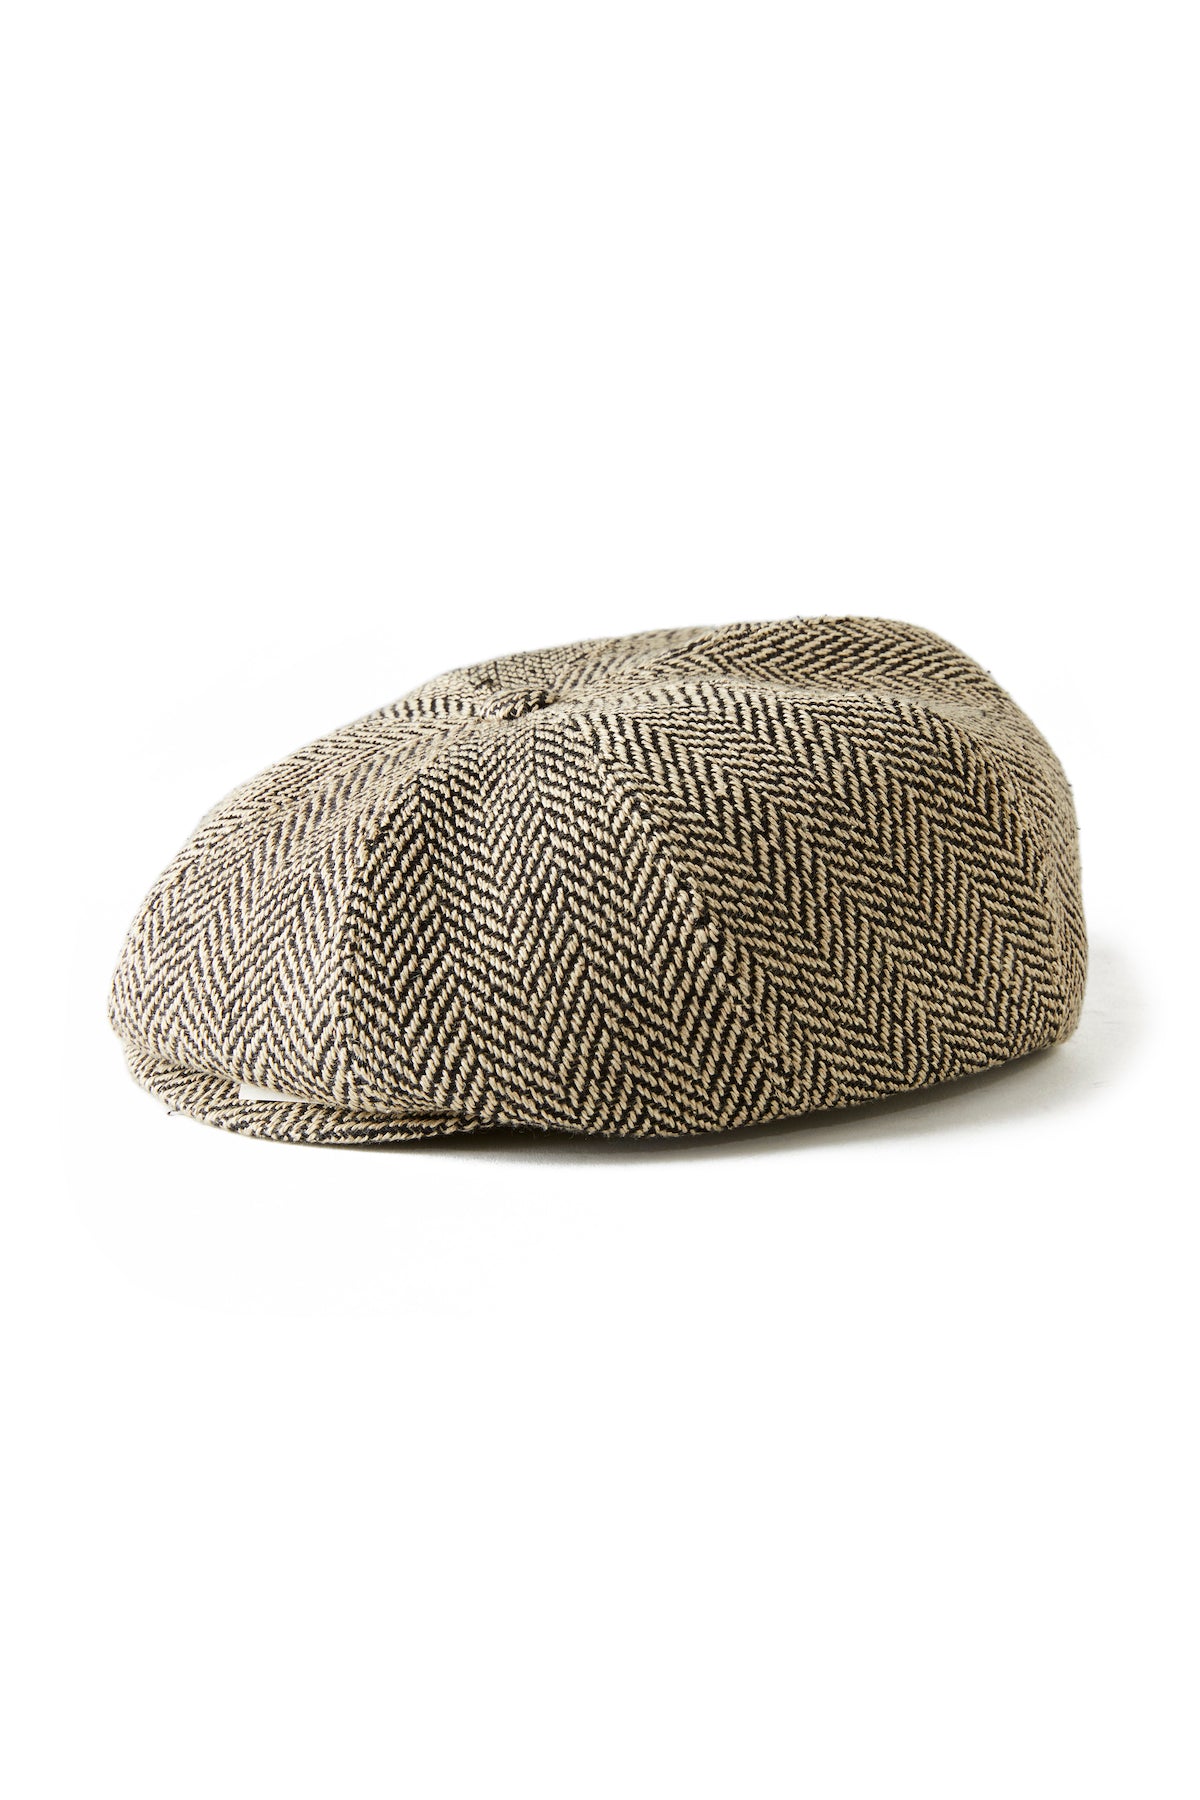 PEAKED CAP (SUMMER TWEED) - 241OJ-HT01 – OLD JOE BRAND